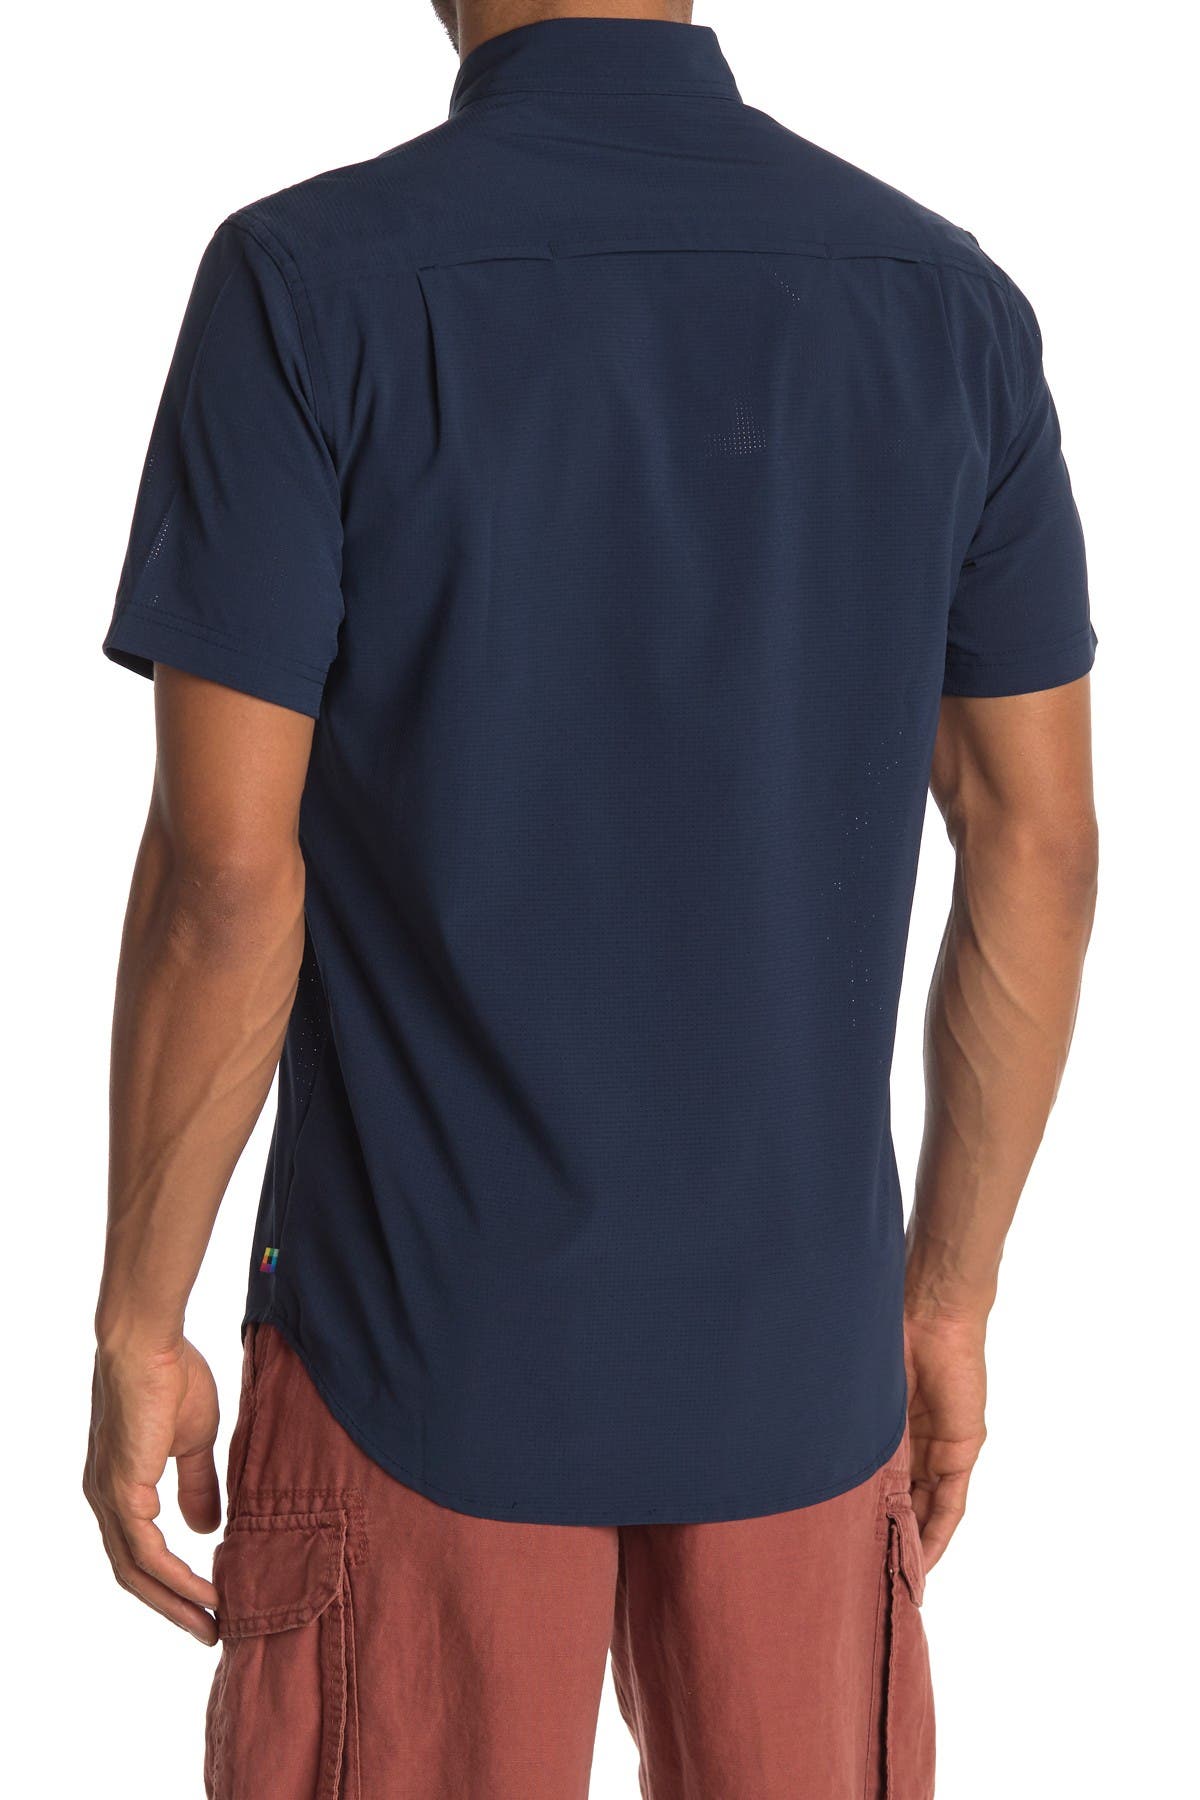 Union Denim Aero Short Sleeve Tech Shirt In Light/pastel Blue4